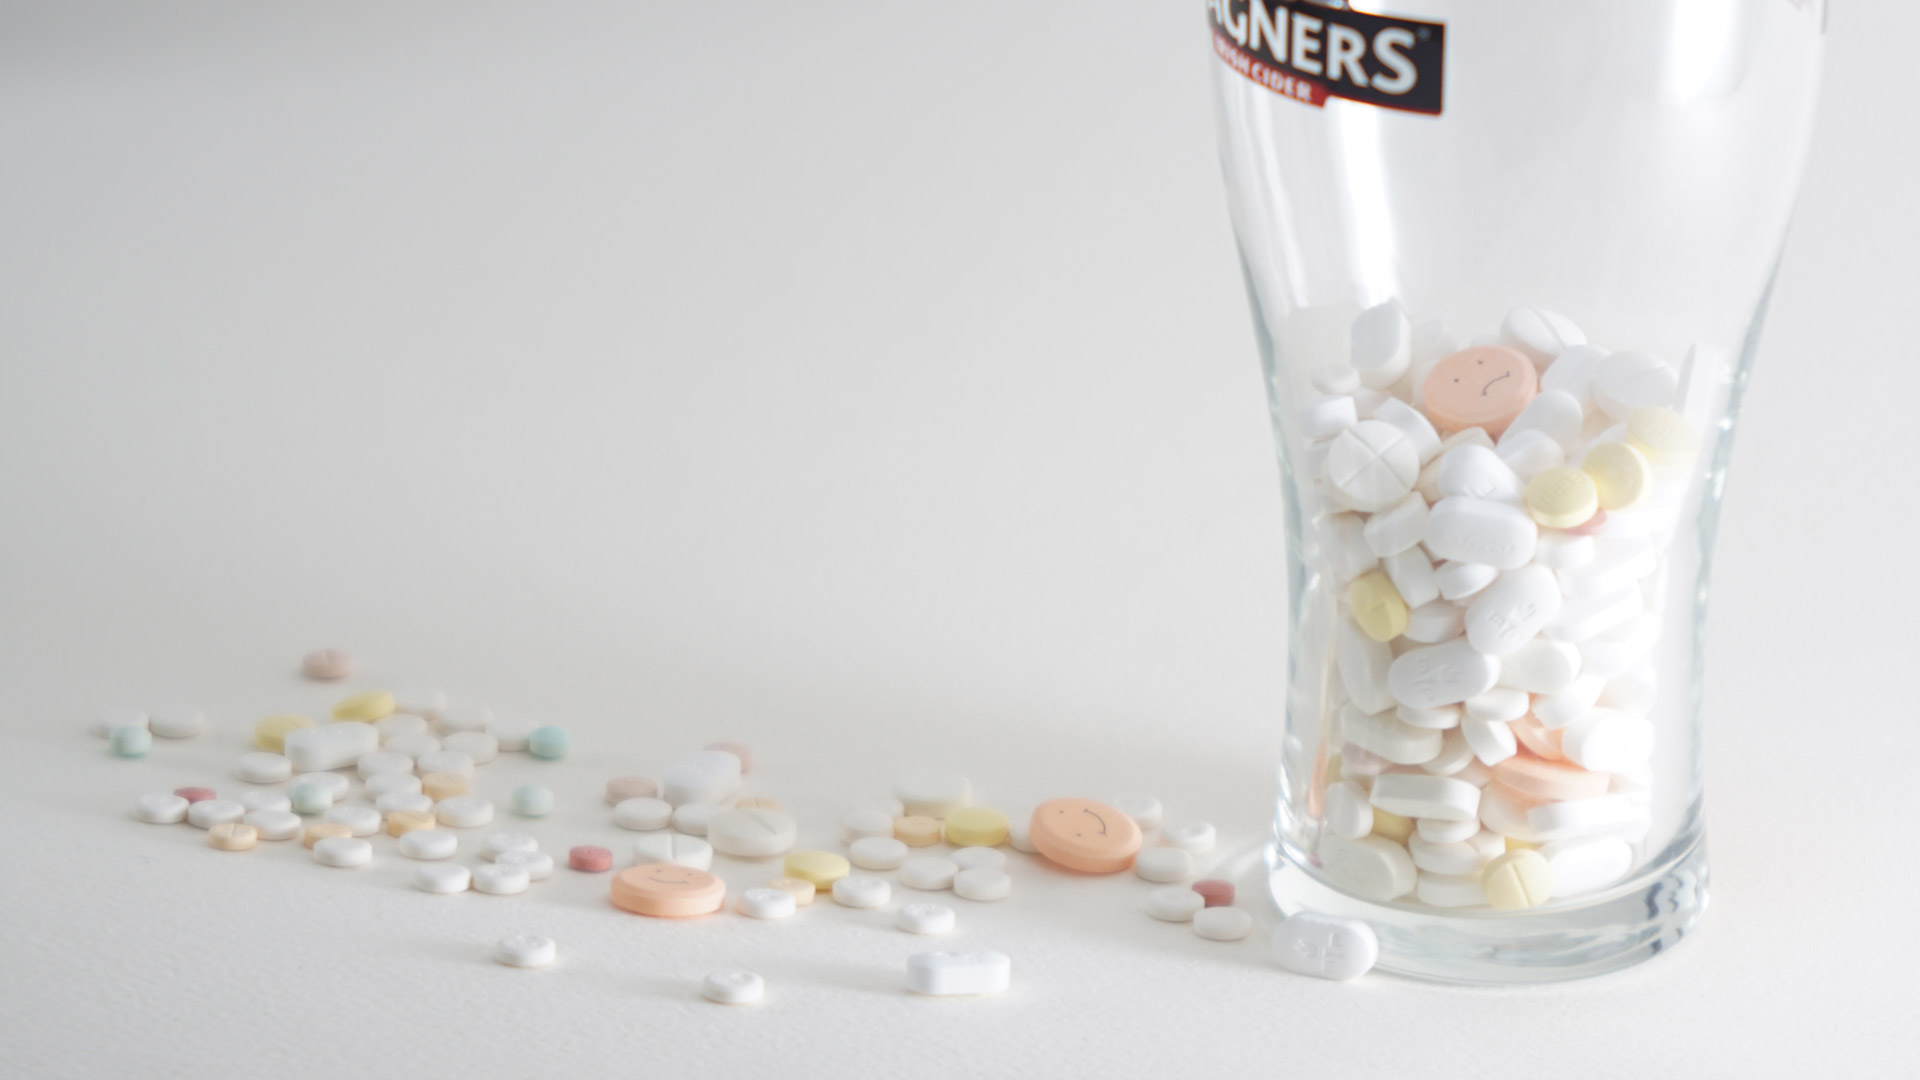 walgreens-overcharging-drugs-pays-60m-settlement